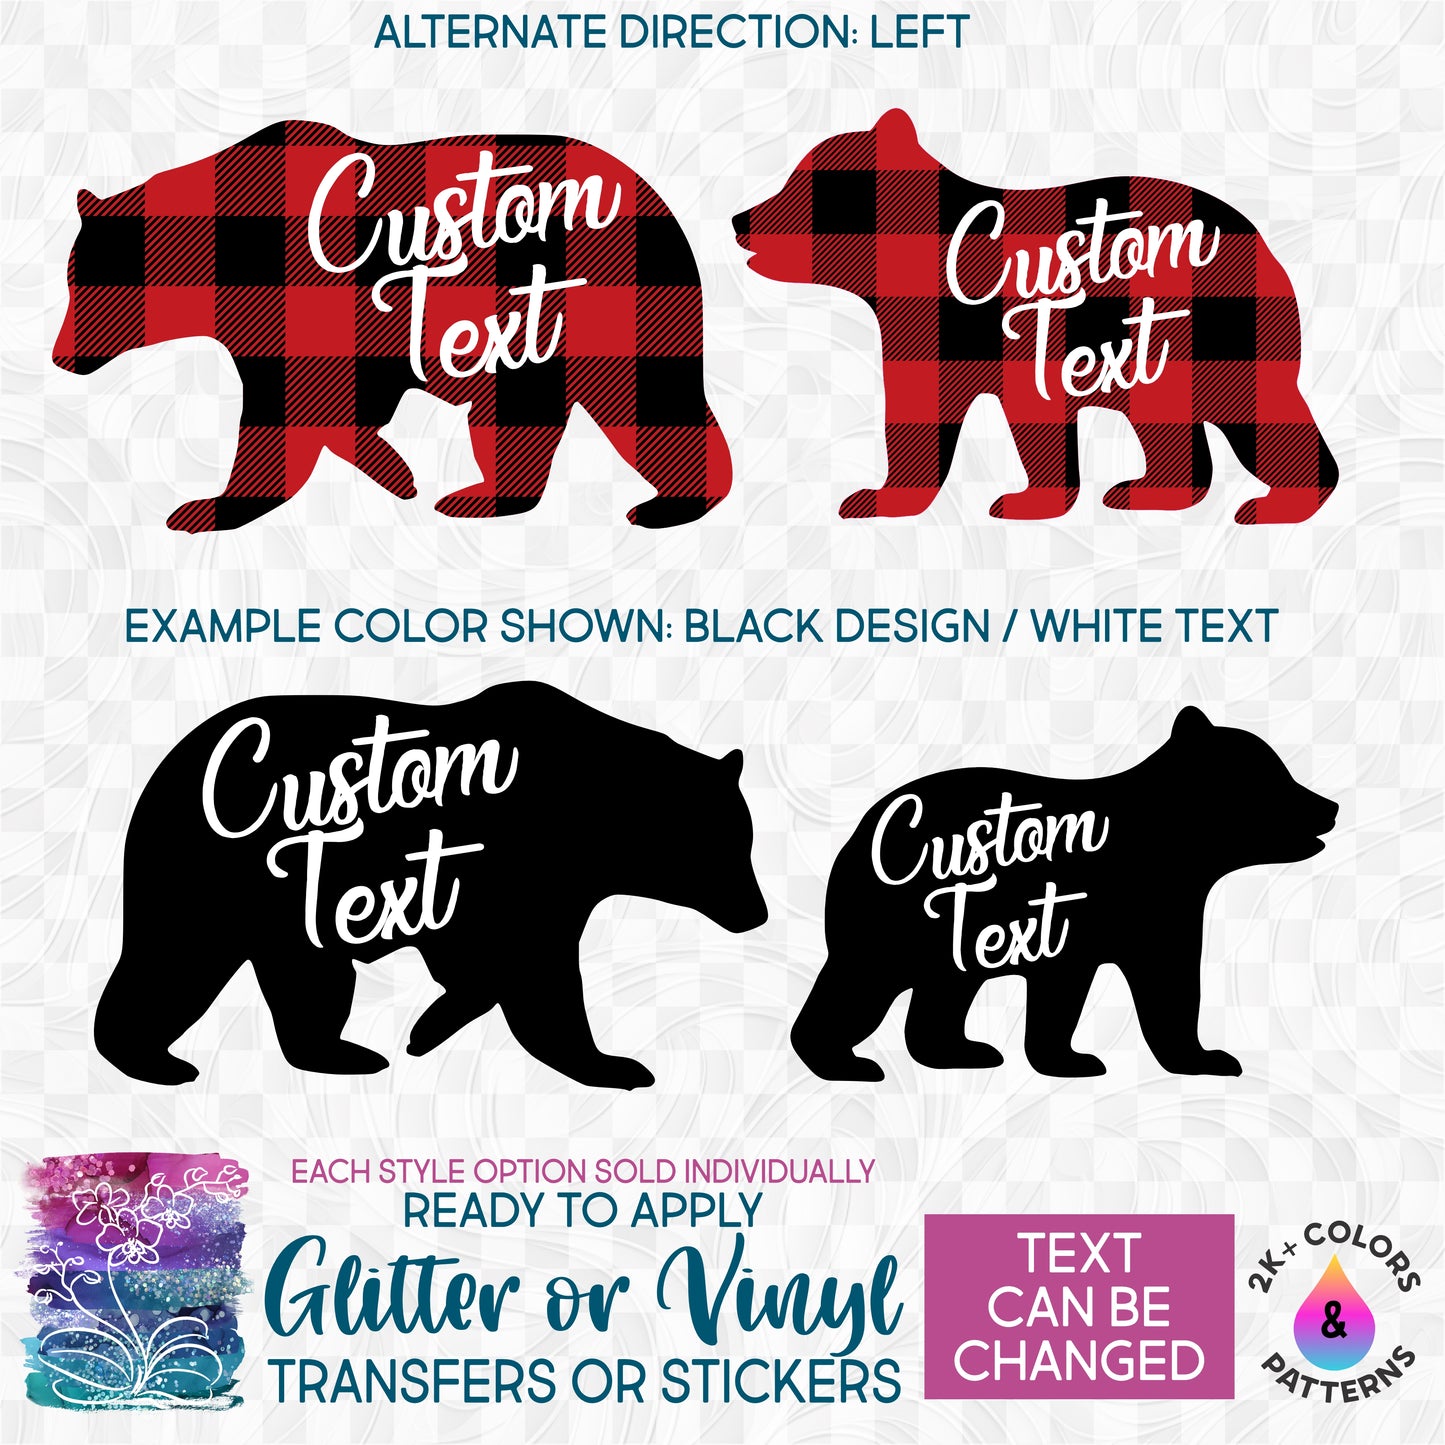 (s232-CC) Bear Family Custom Text Buffalo Plaid Glitter or Vinyl Iron-On Transfer or Sticker